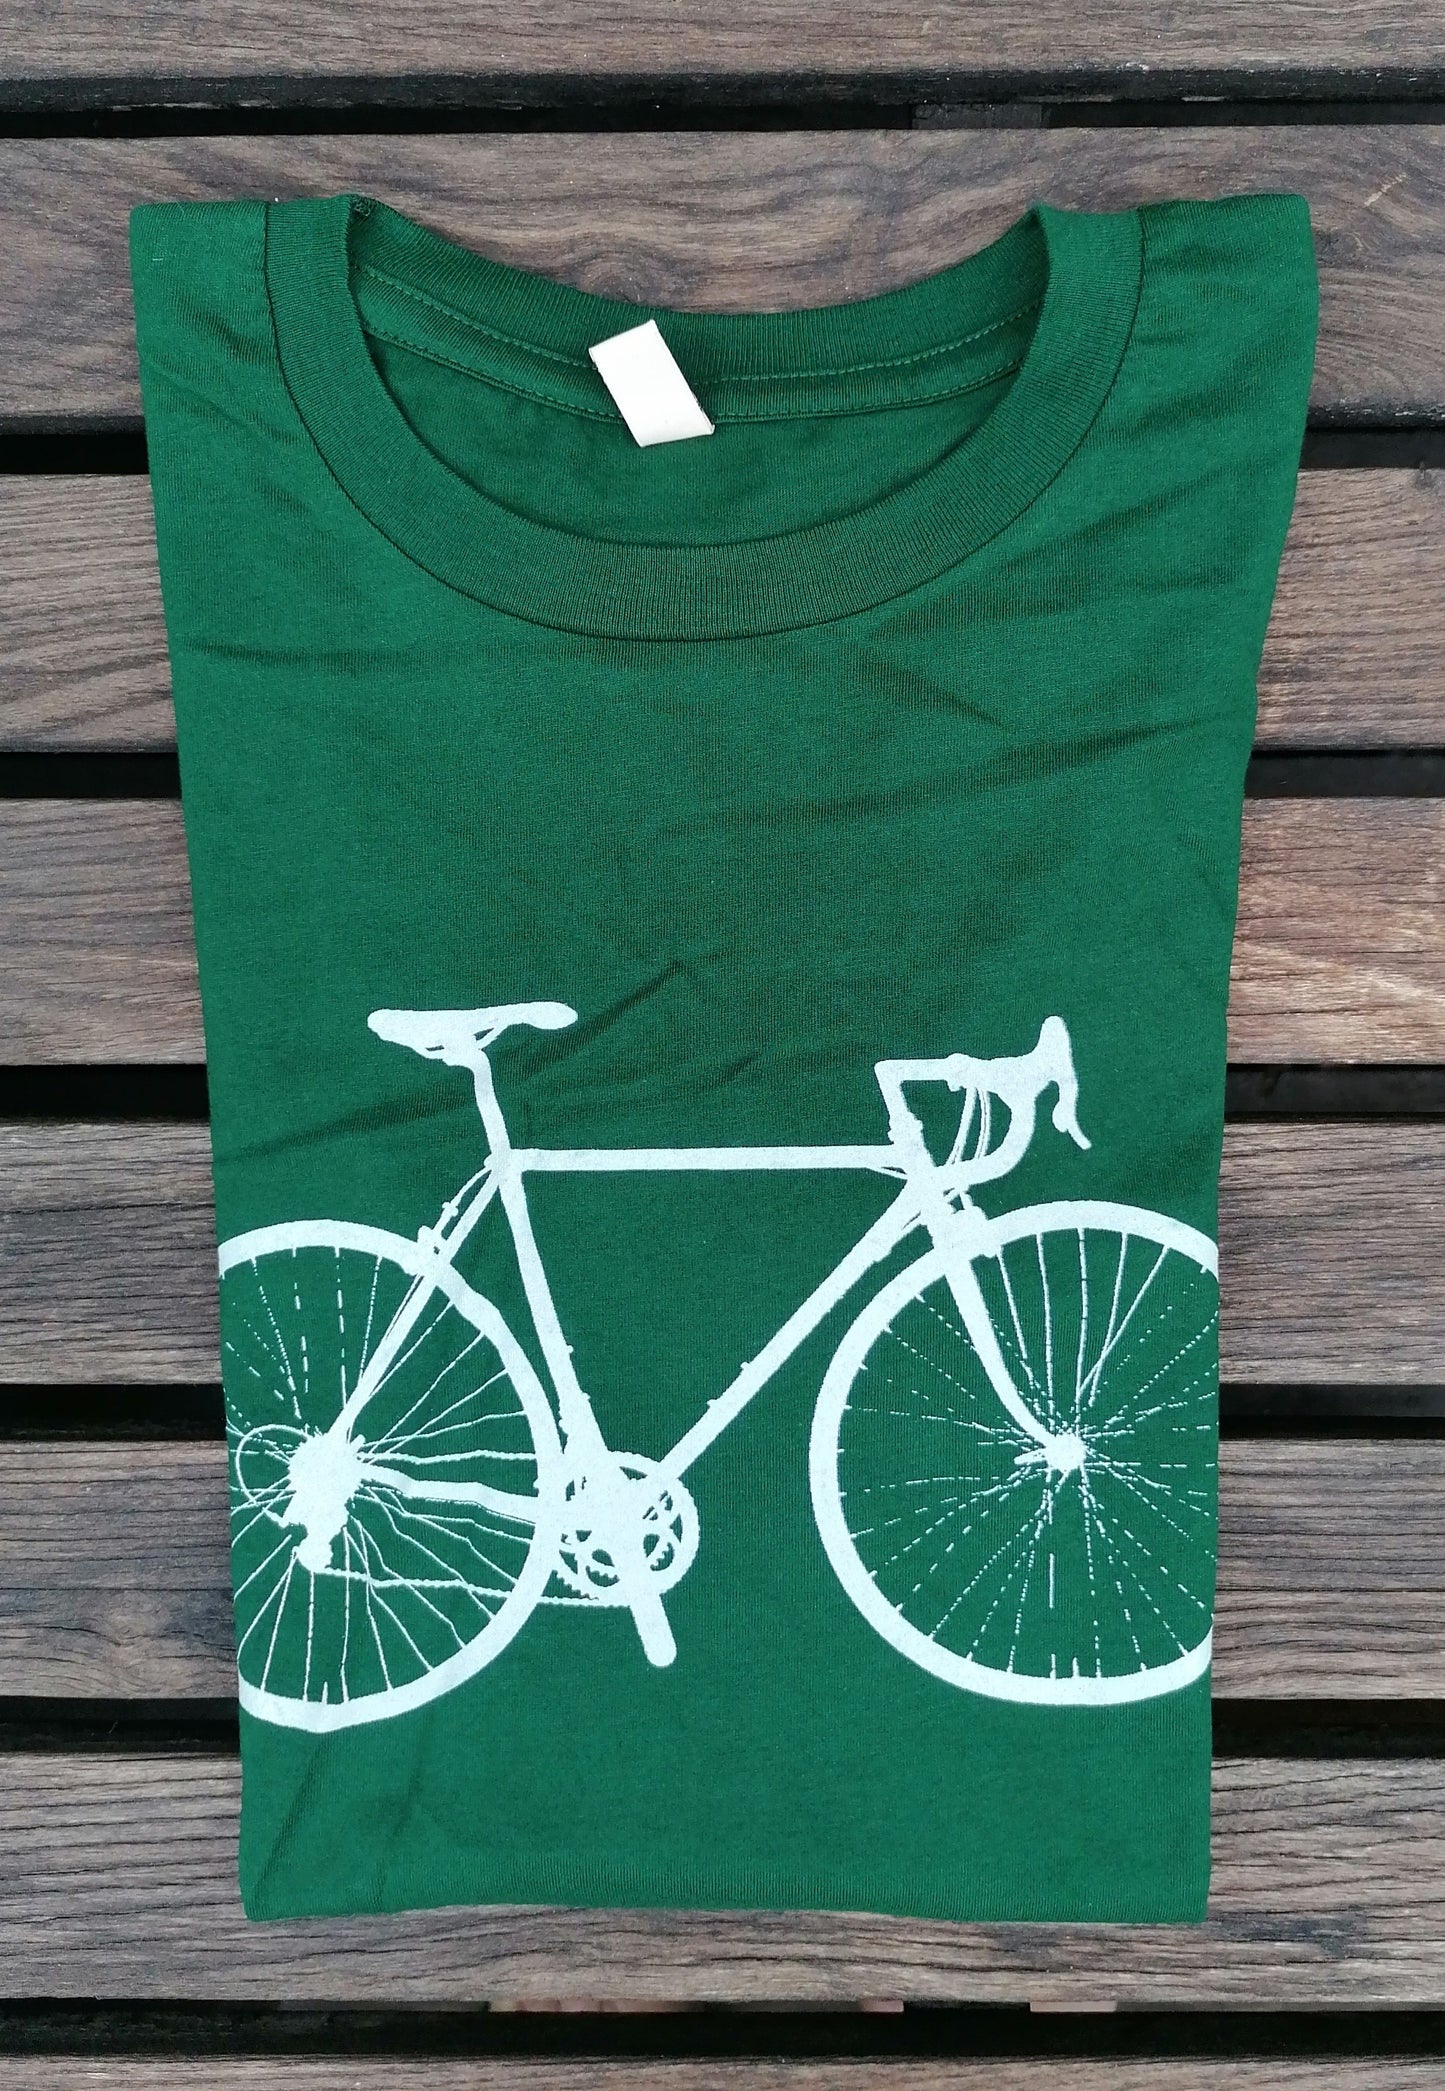 Herr t-shirt cykel buteljgrön